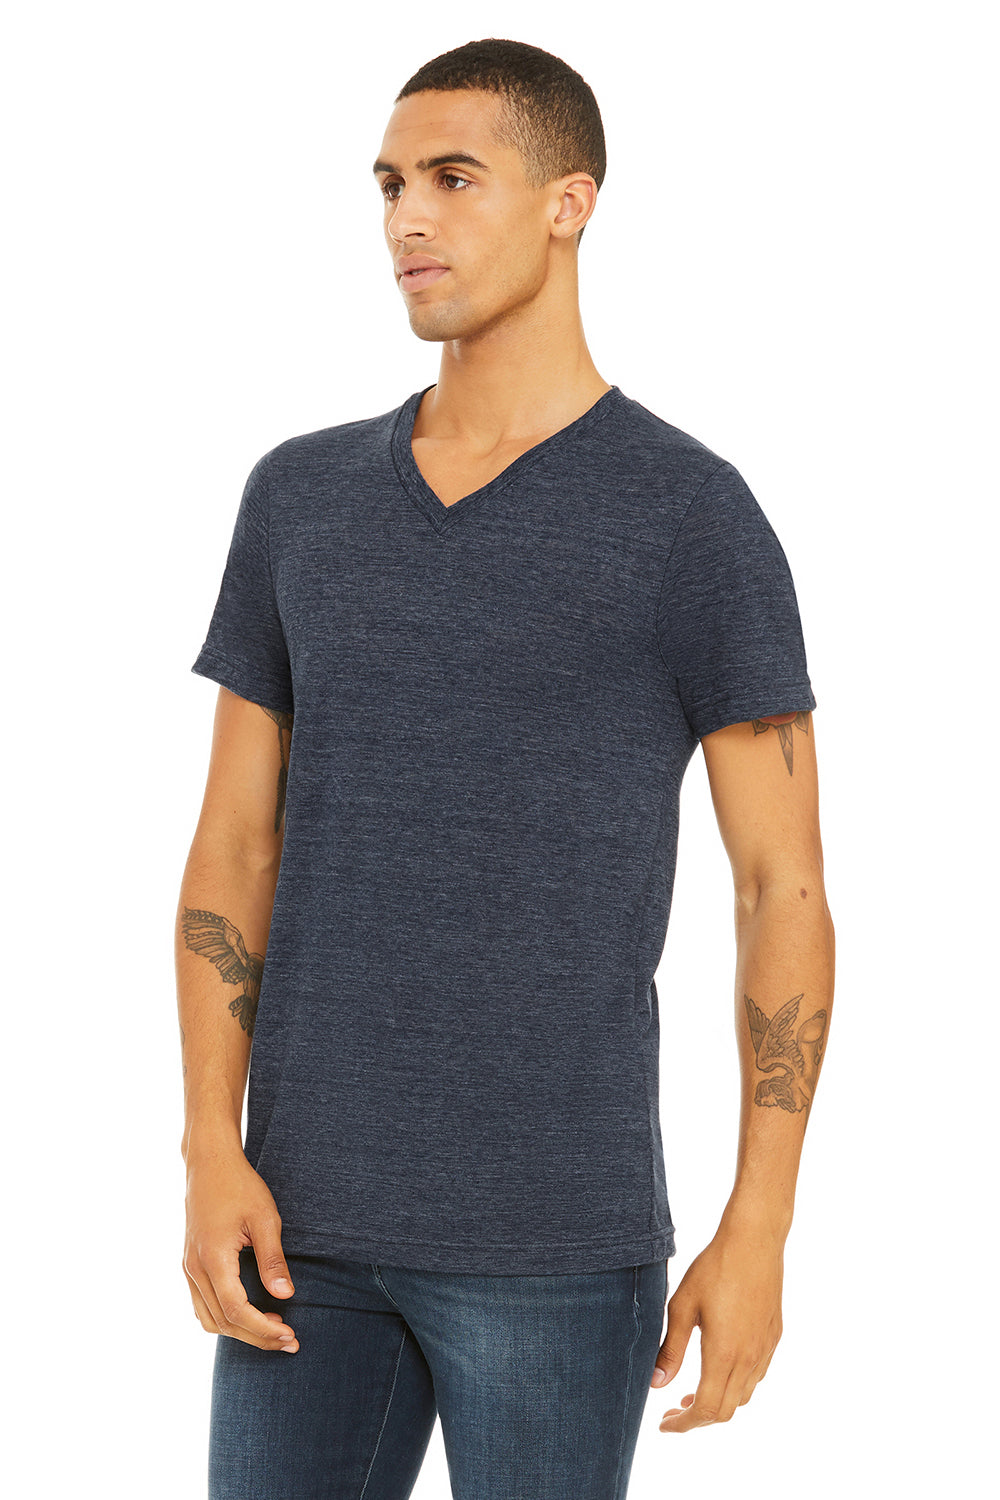 Bella + Canvas BC3005/3005/3655C Mens Jersey Short Sleeve V-Neck T-Shirt Navy Blue Slub Model 3Q